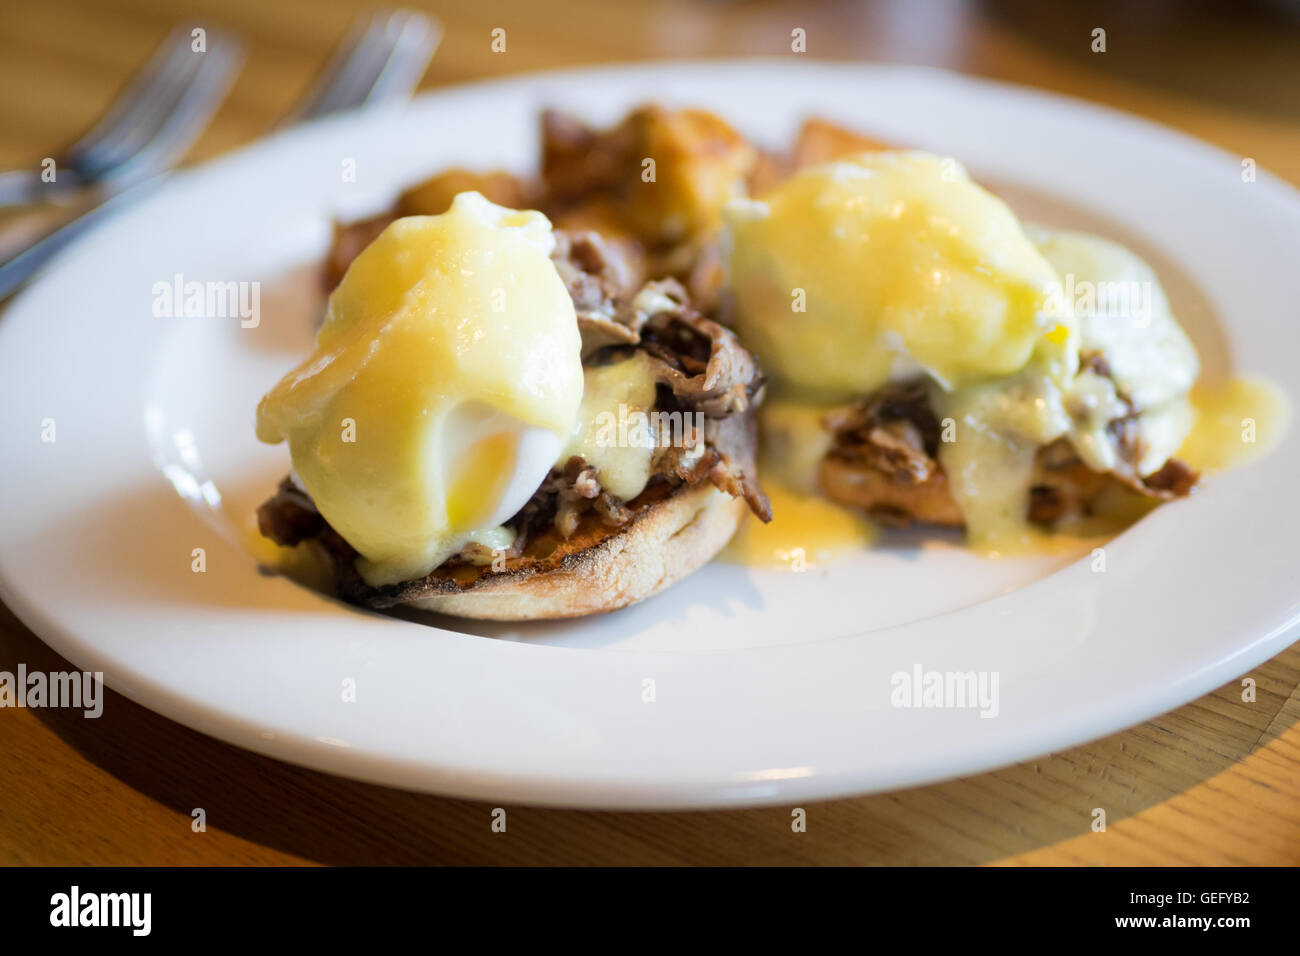 Prime rib eggs benedict with potatoes for breakfast. Stock Photo